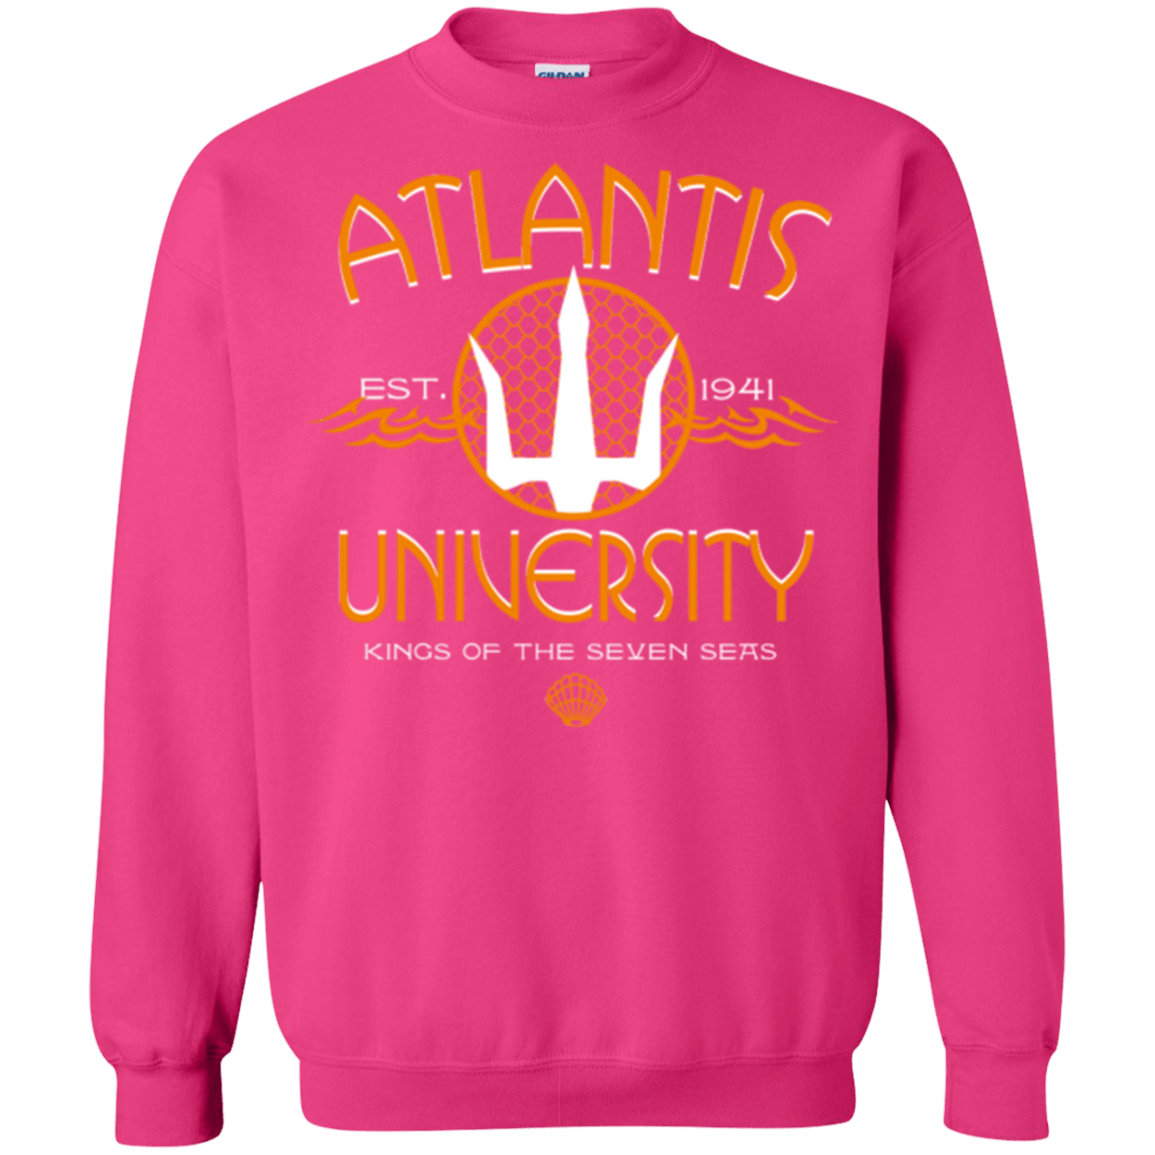 Sweatshirts Heliconia / Small Atlantis University Crewneck Sweatshirt